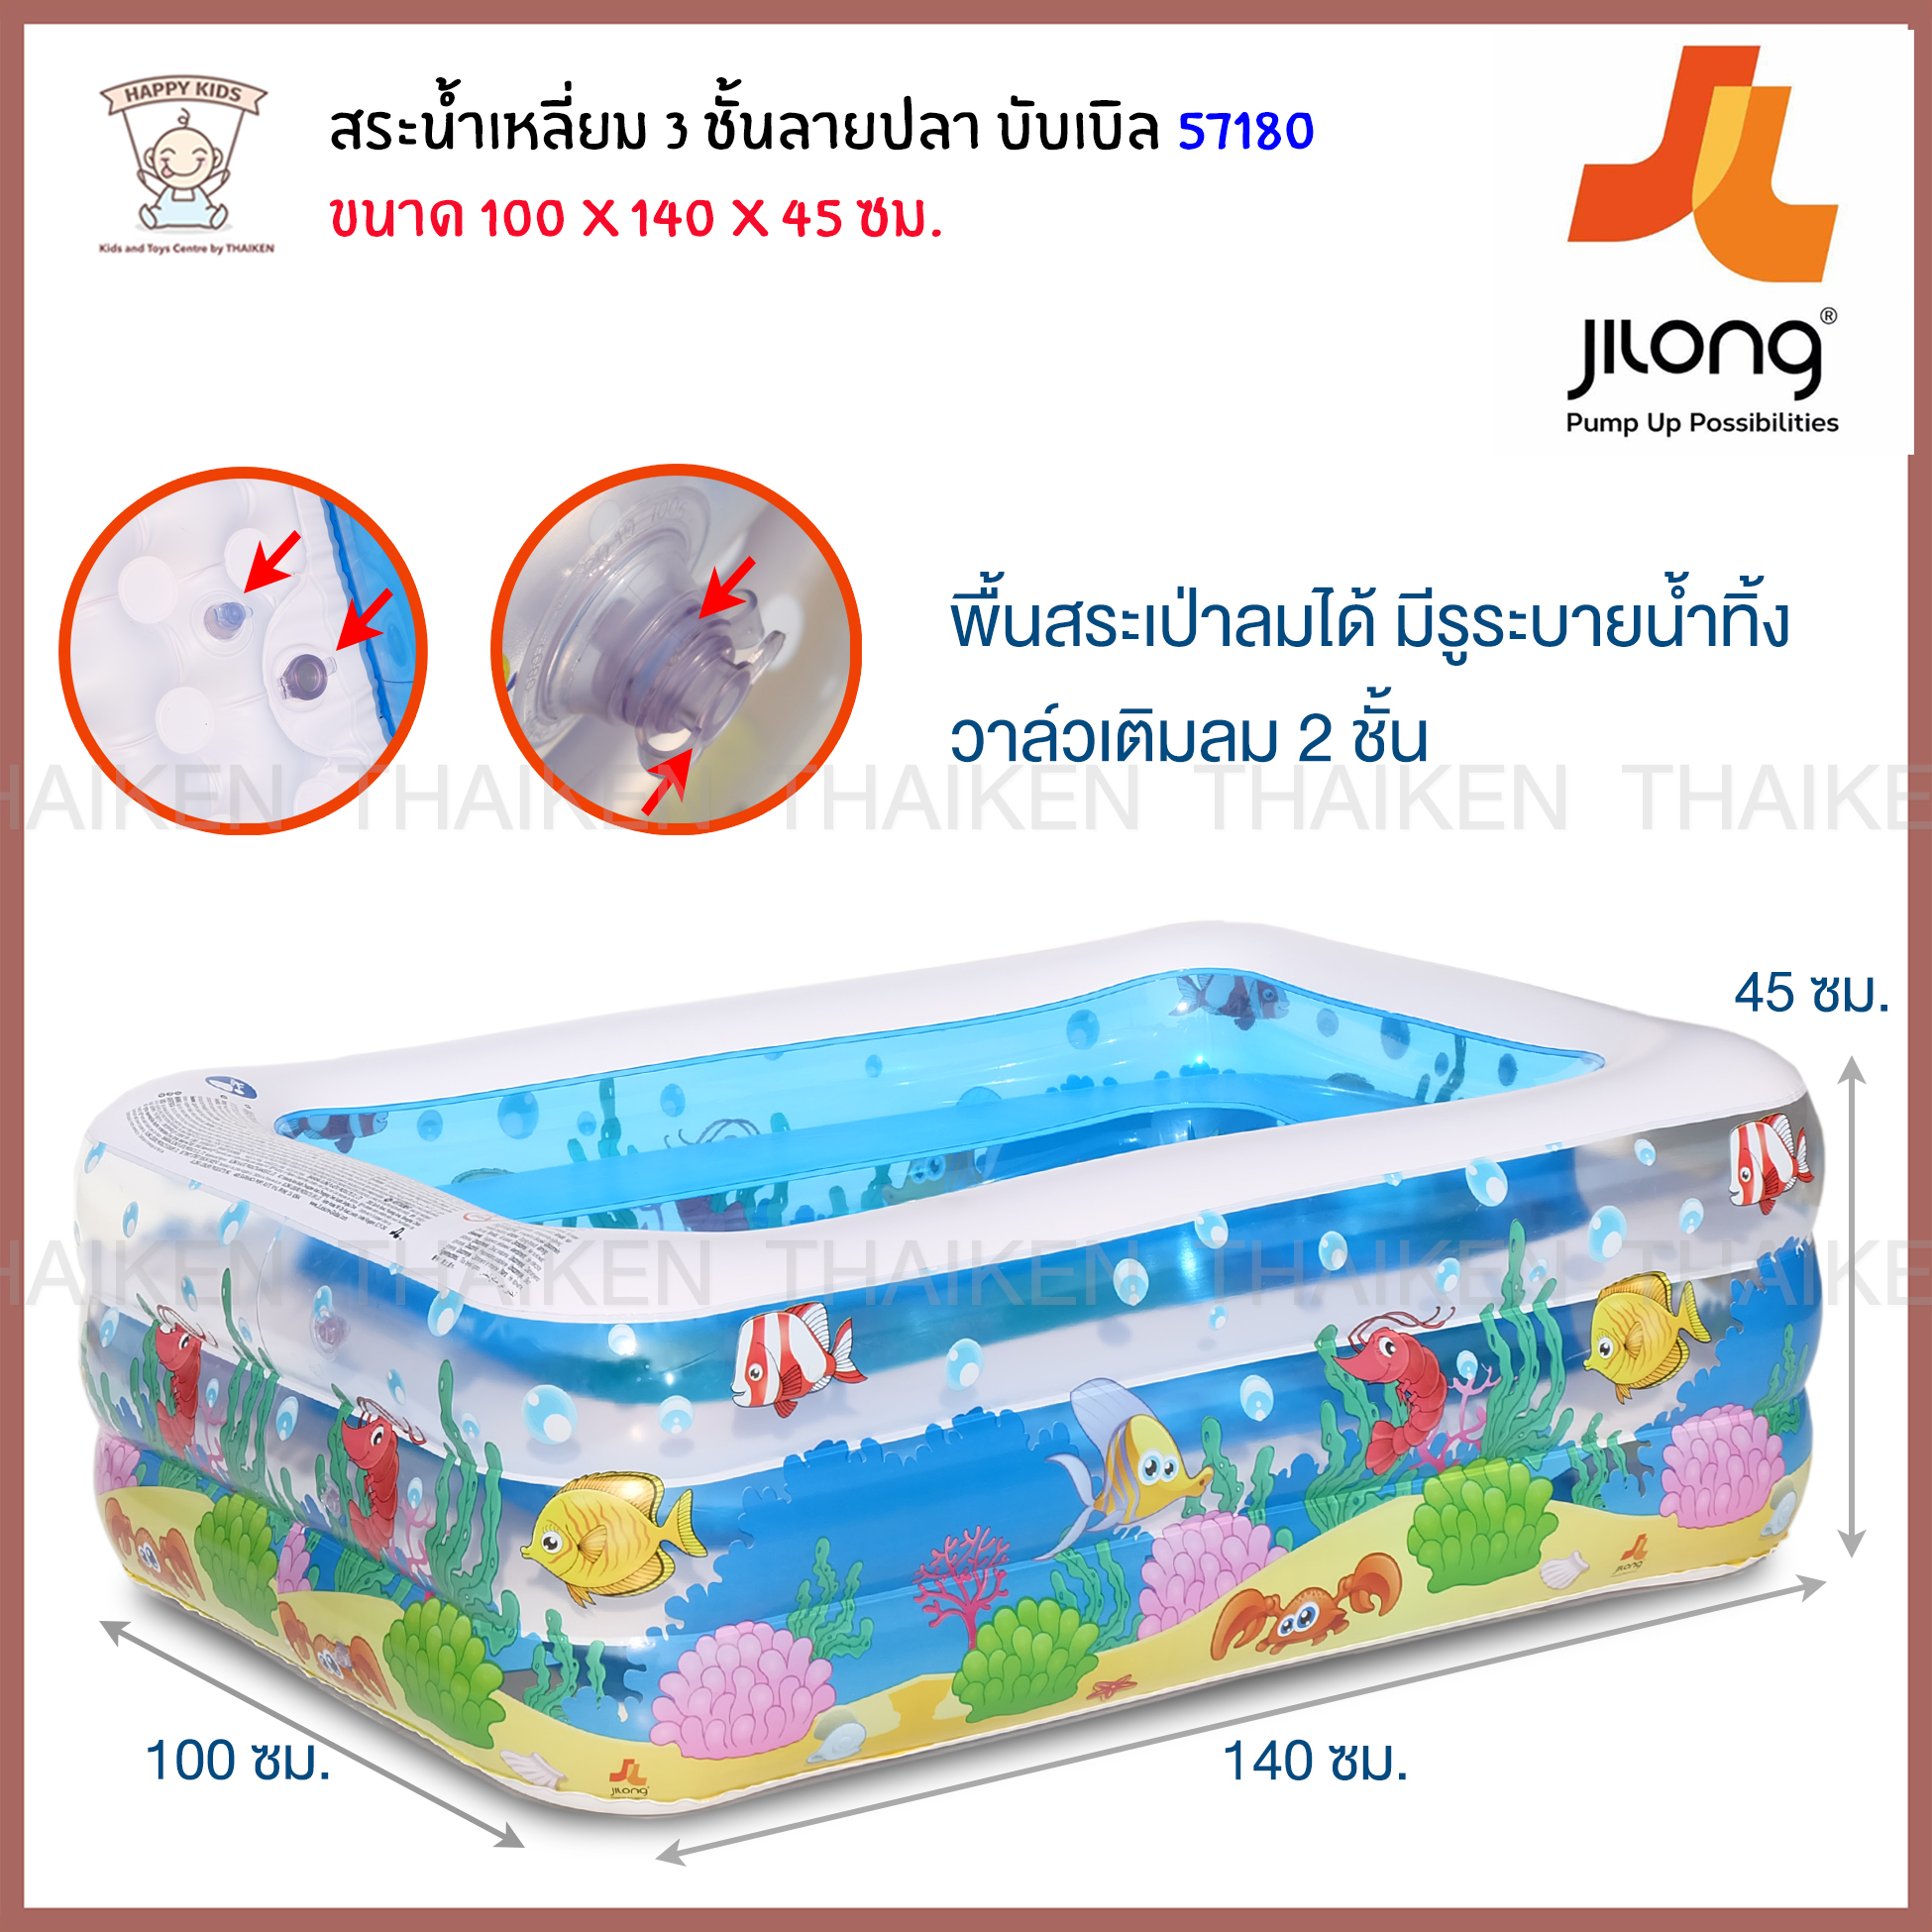 Thaiken Jilong แท้ สระน้ำเหลี่ยม 3 ชั้น ลายปลา พื้นบับเบิล 140x100x45 ซม. 57180